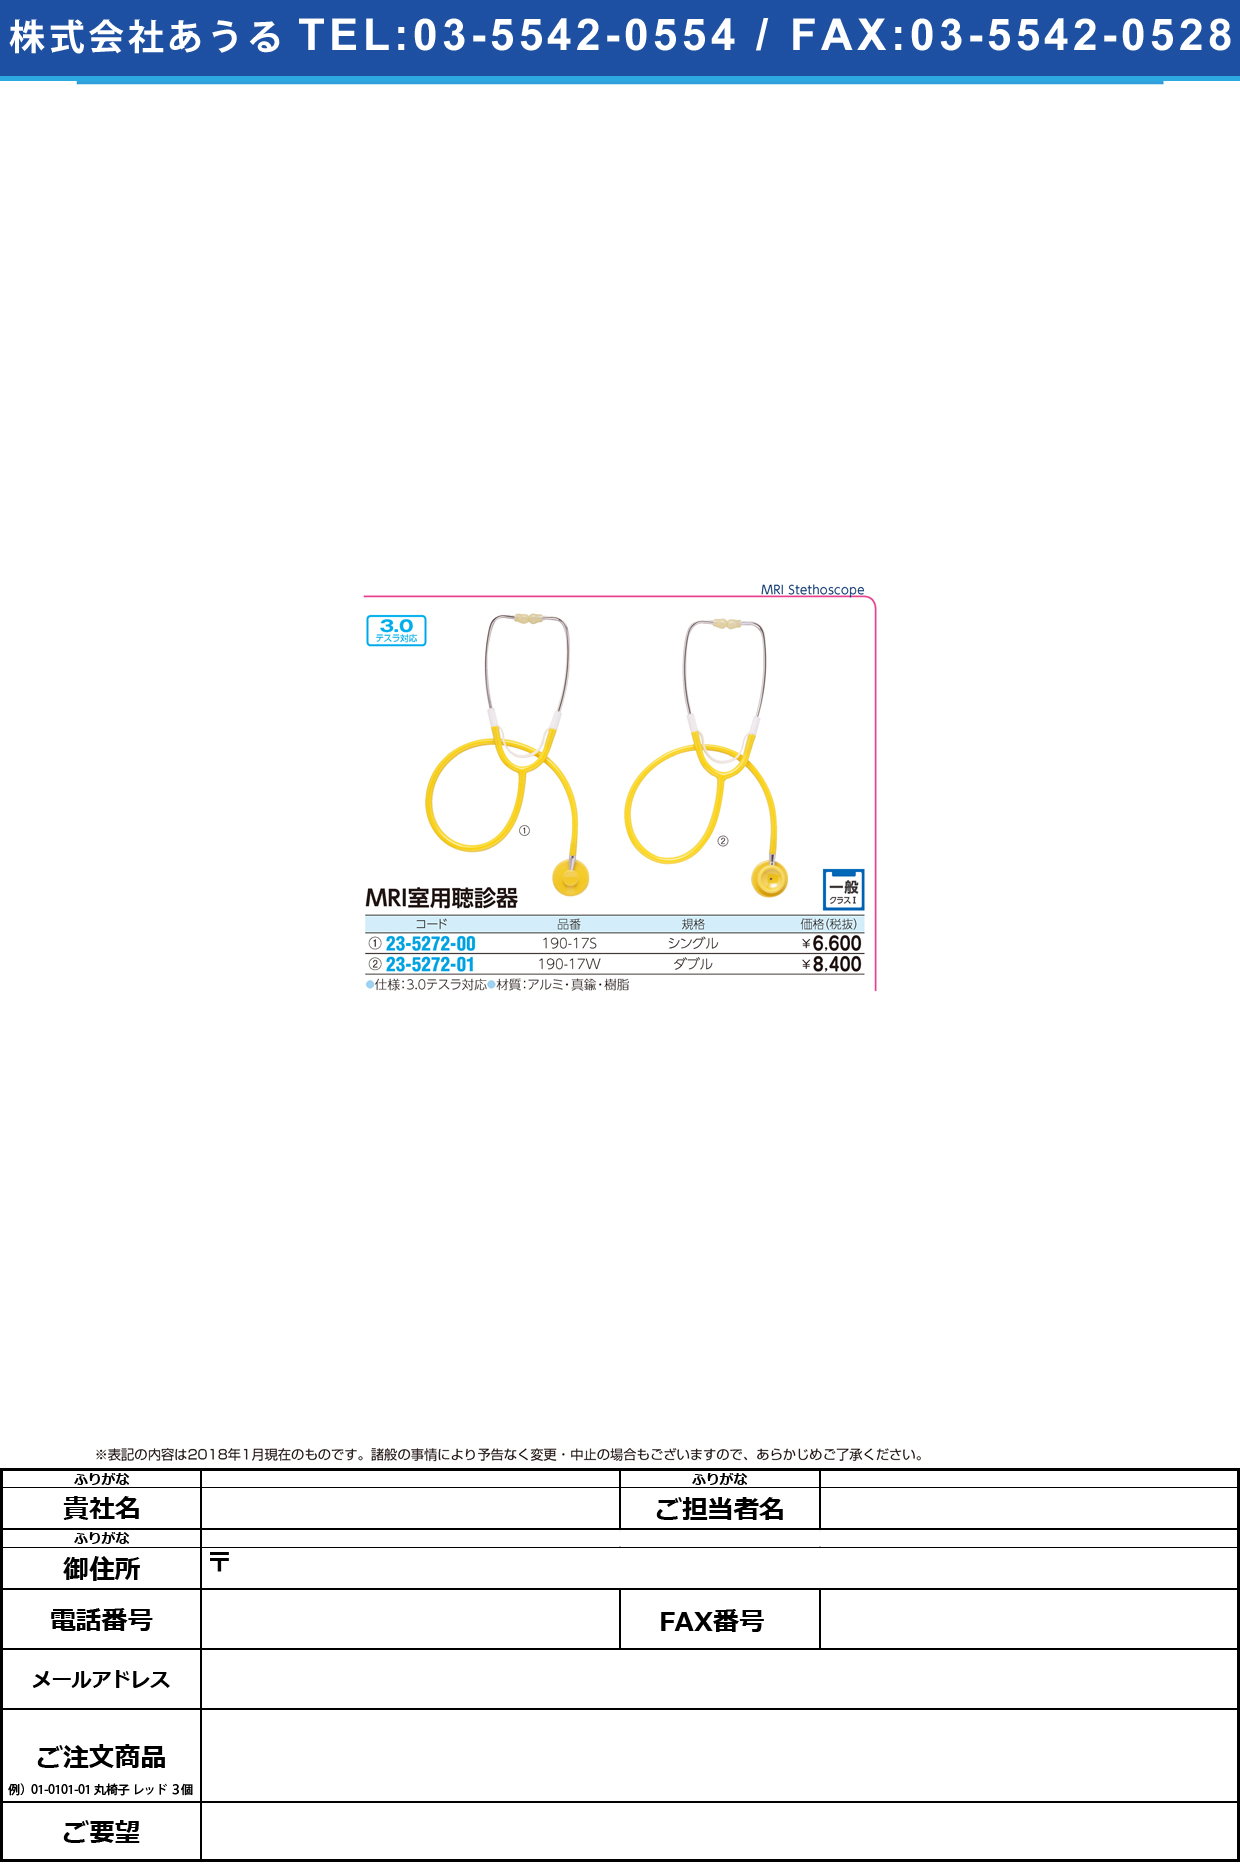 (23-5272-01)ＭＲＩ室用聴診器 190-17W(ﾀﾞﾌﾞﾙ) MRIｼﾂﾖｳﾁｮｳｼﾝｷ【1台単位】【2019年カタログ商品】